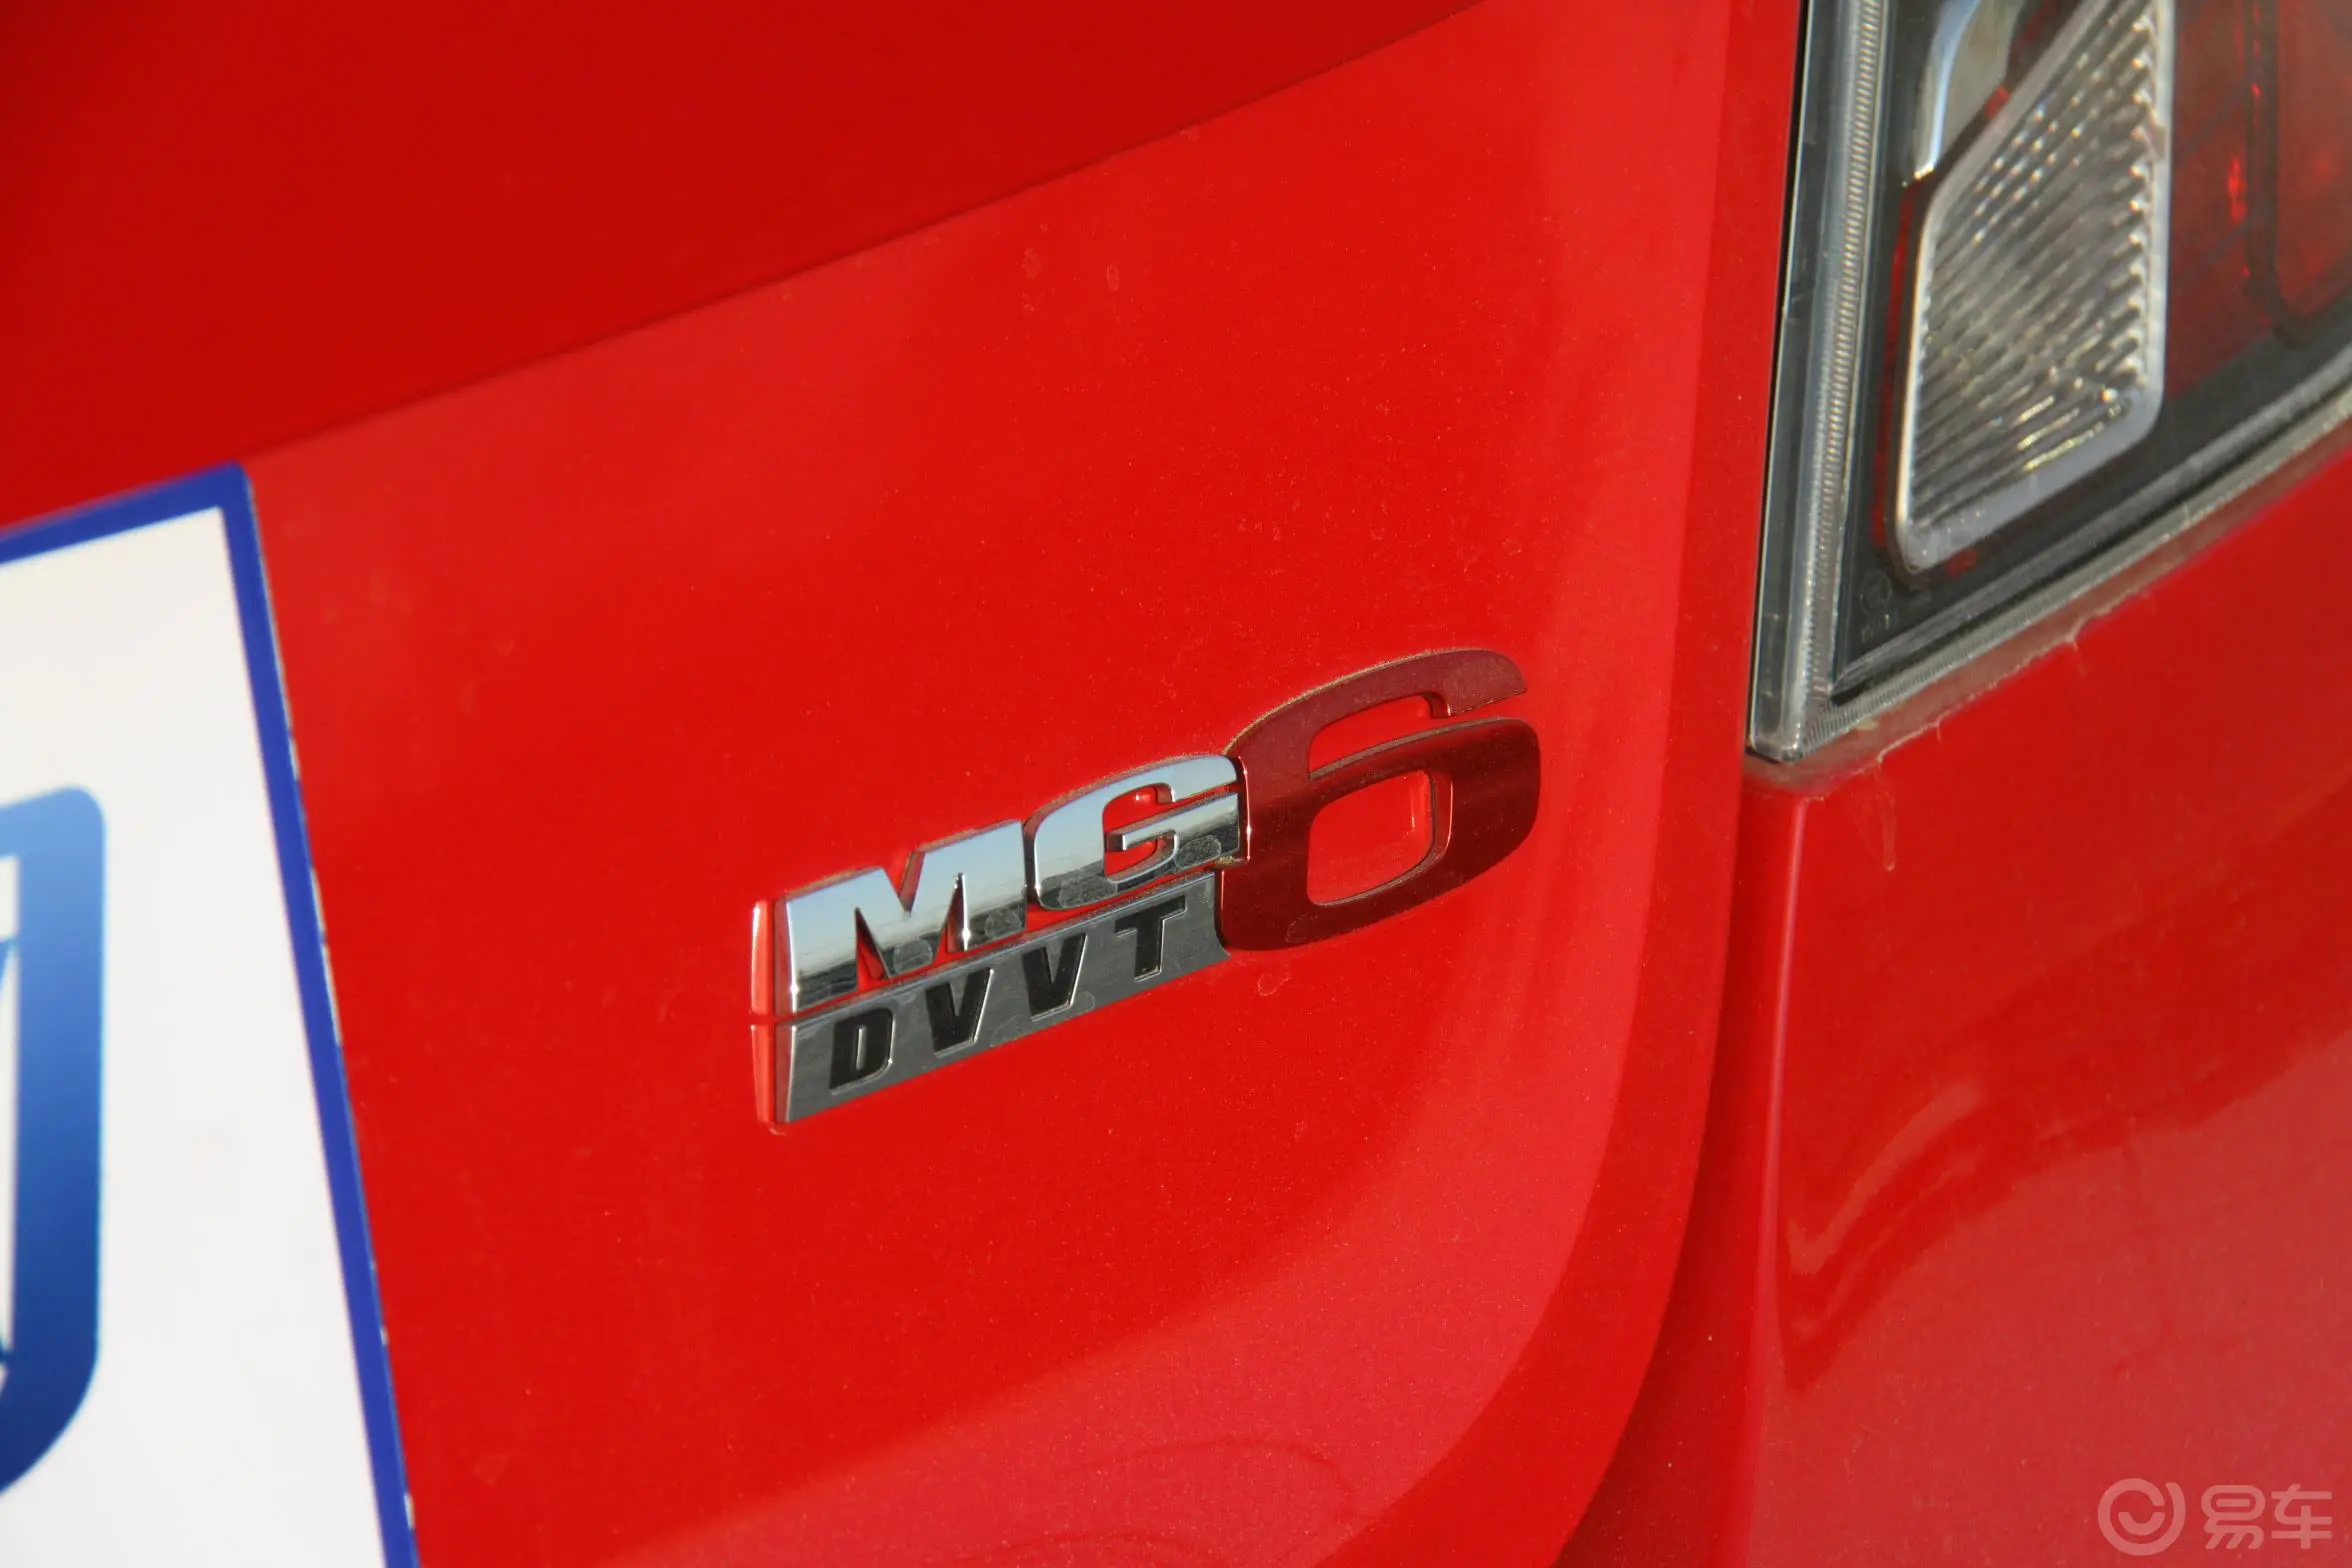 MG6掀背 1.8DVVT 自动 舒适版外观